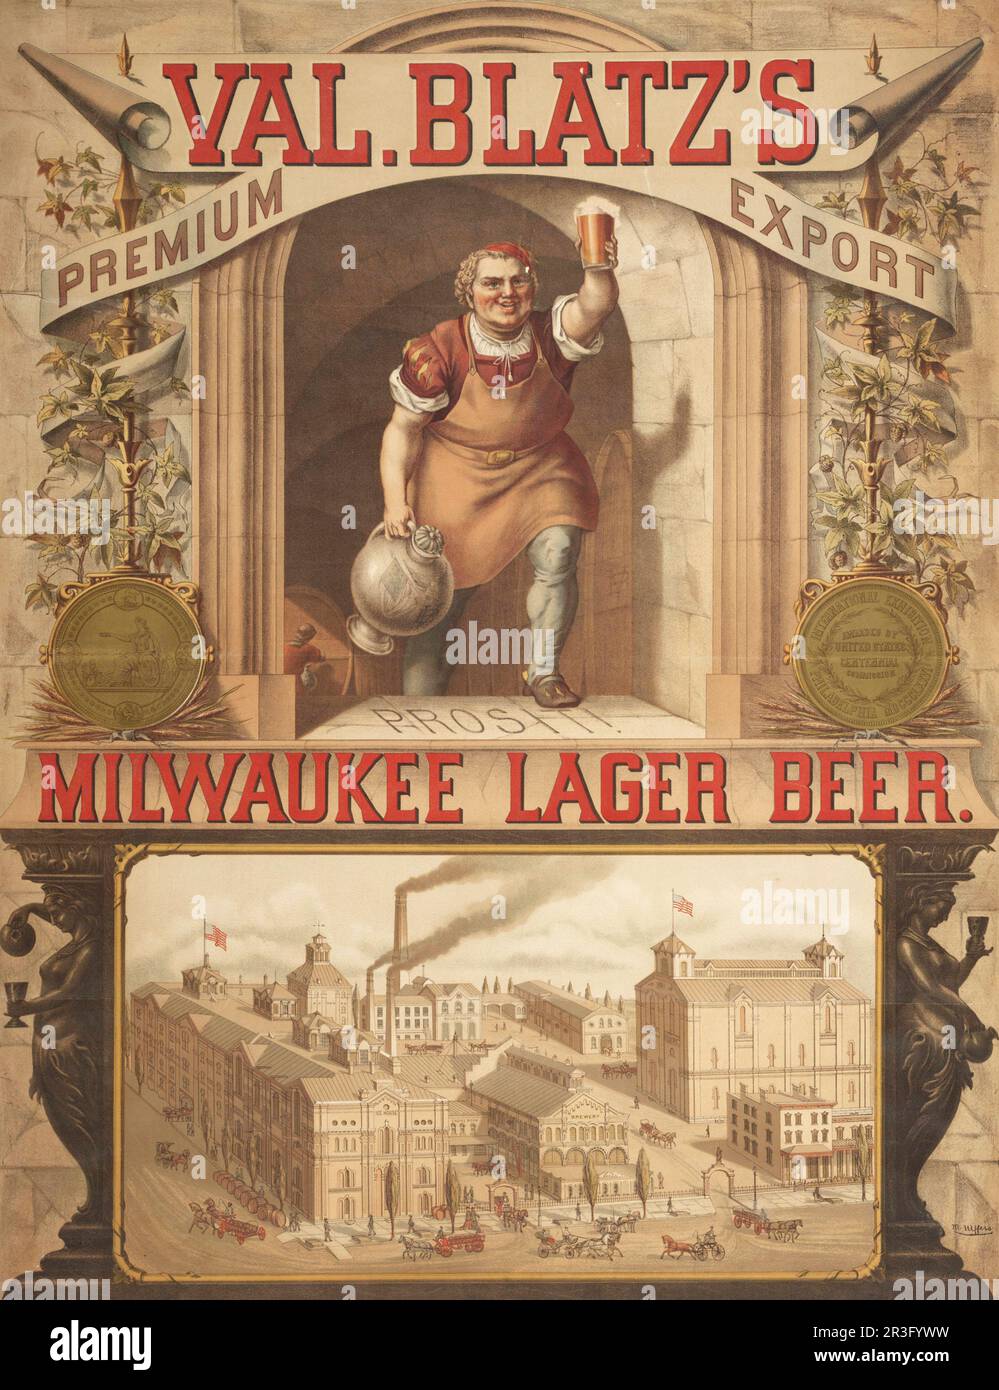 Vintage advertisement for Val. Blatz's premium export Milwaukee lager beer. Stock Photo